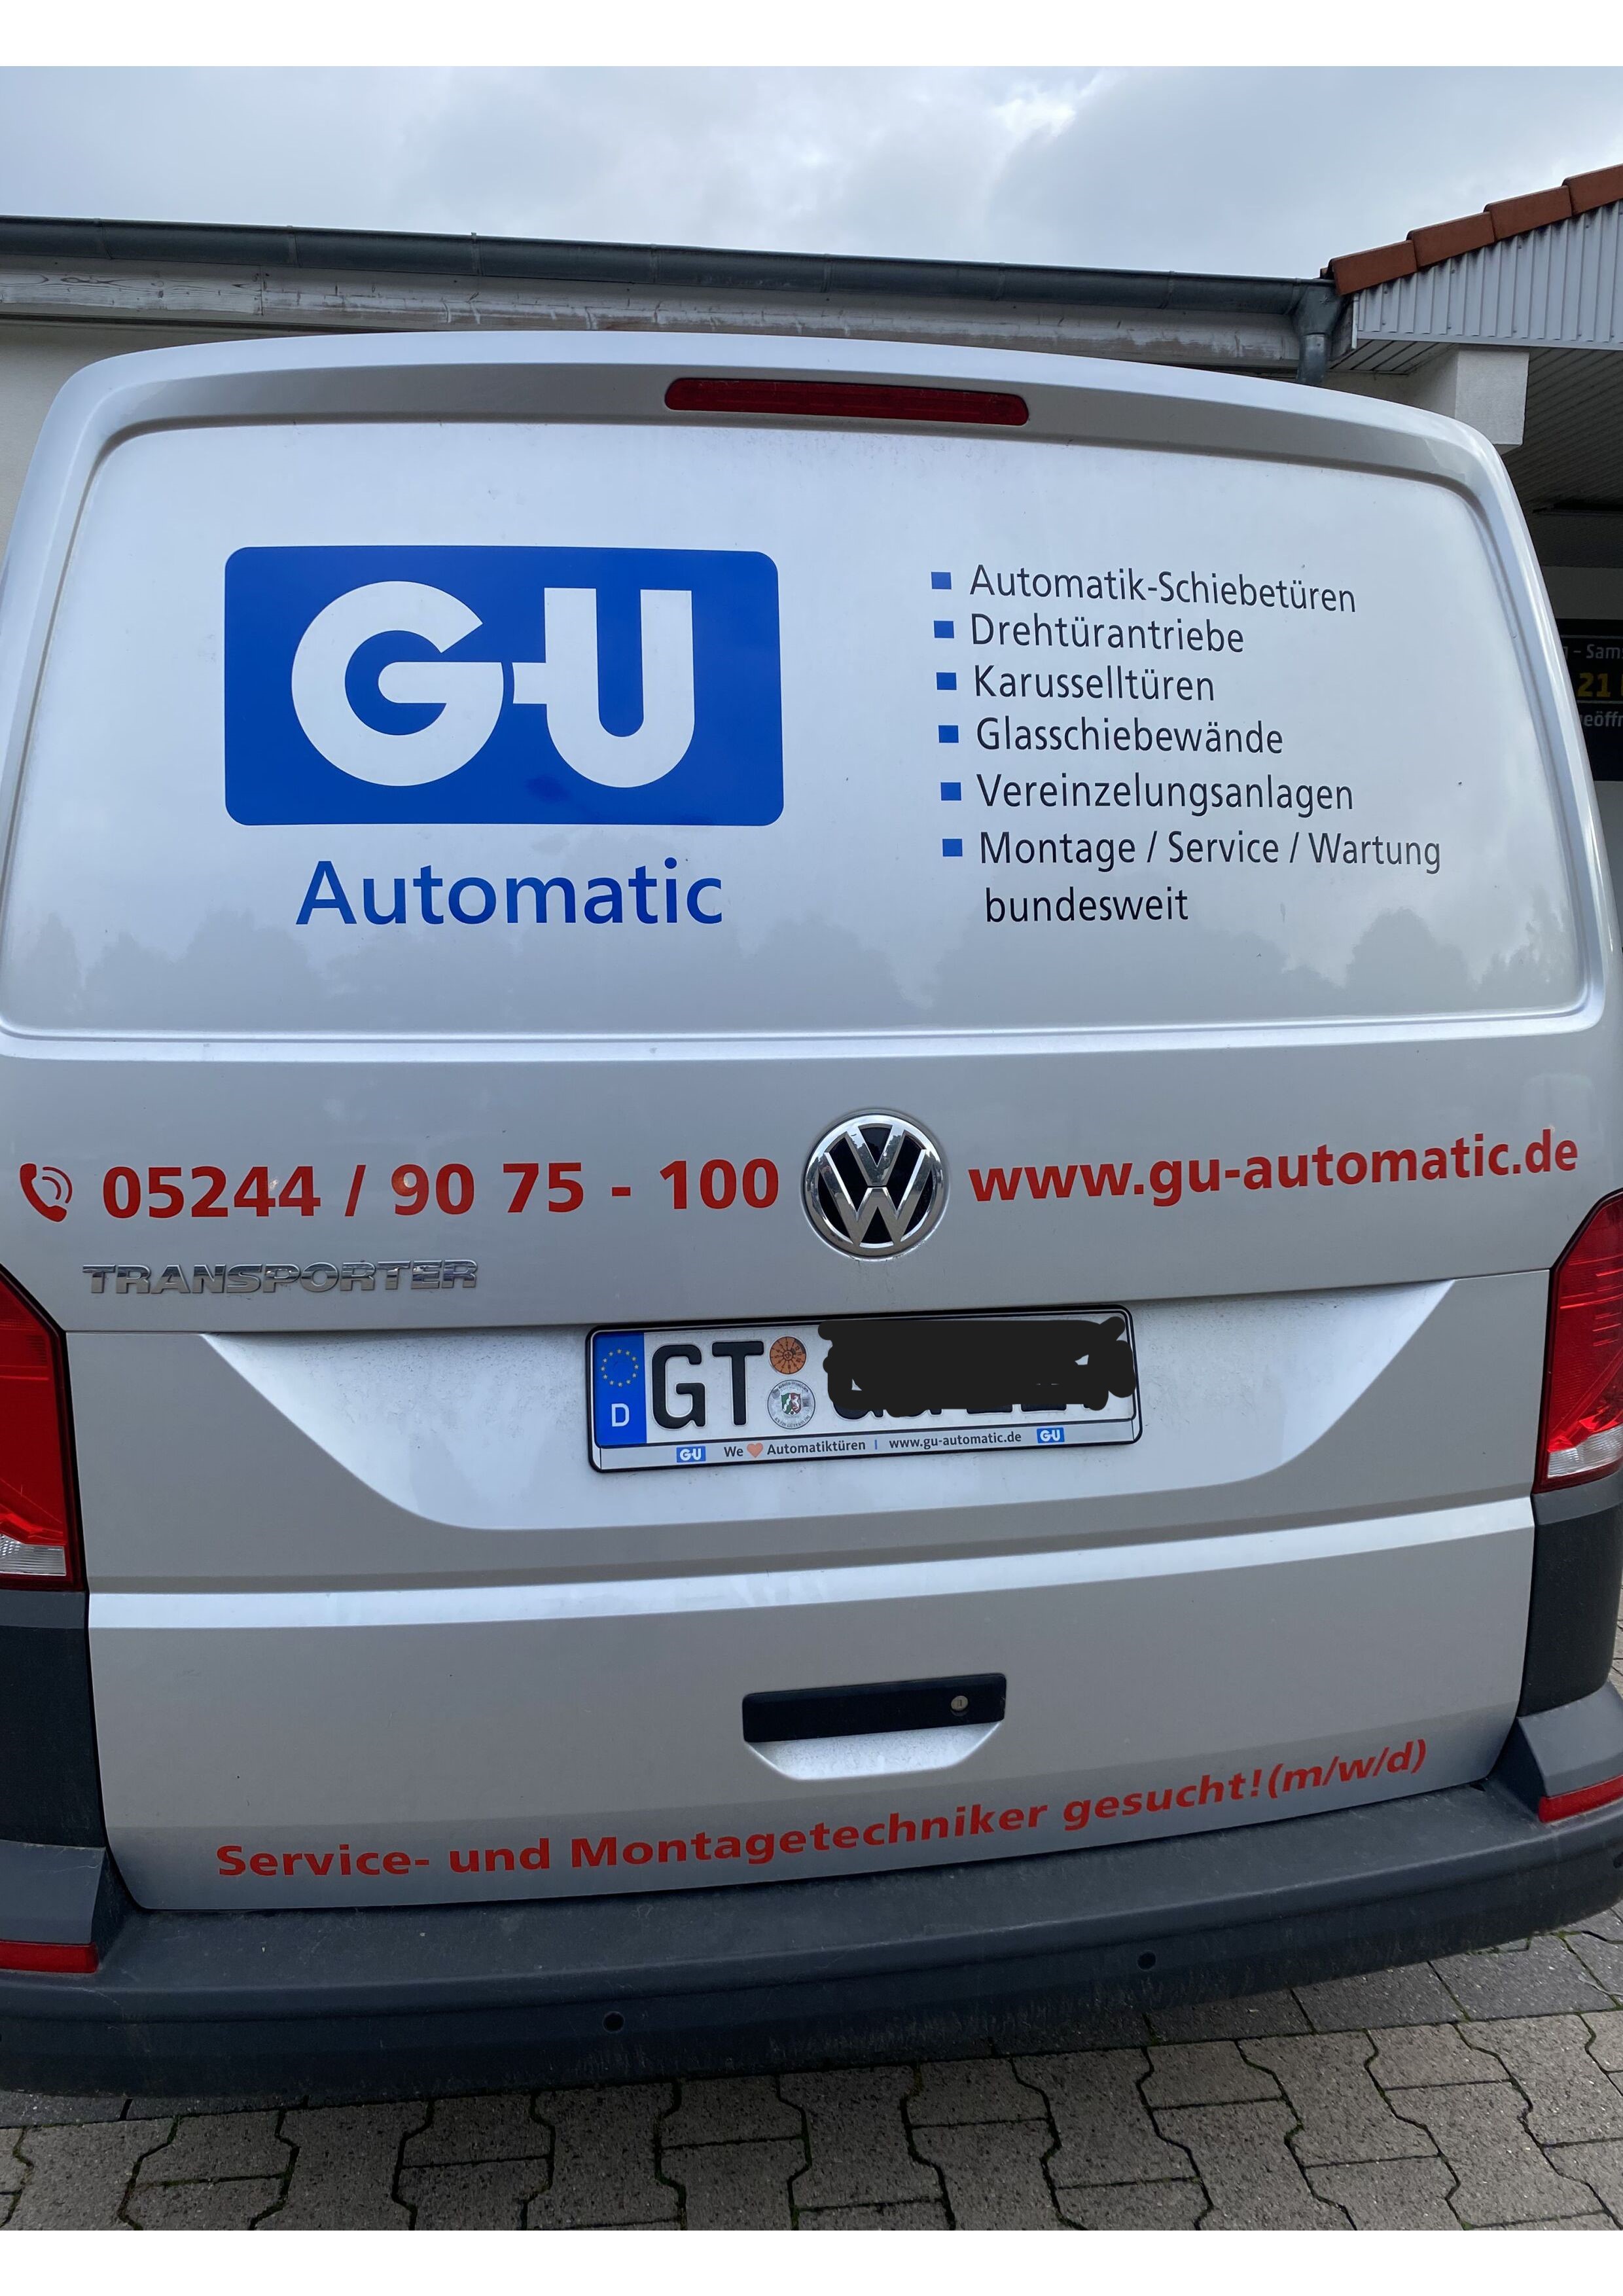 Bild 1 GU Automatic GmbH in Rietberg